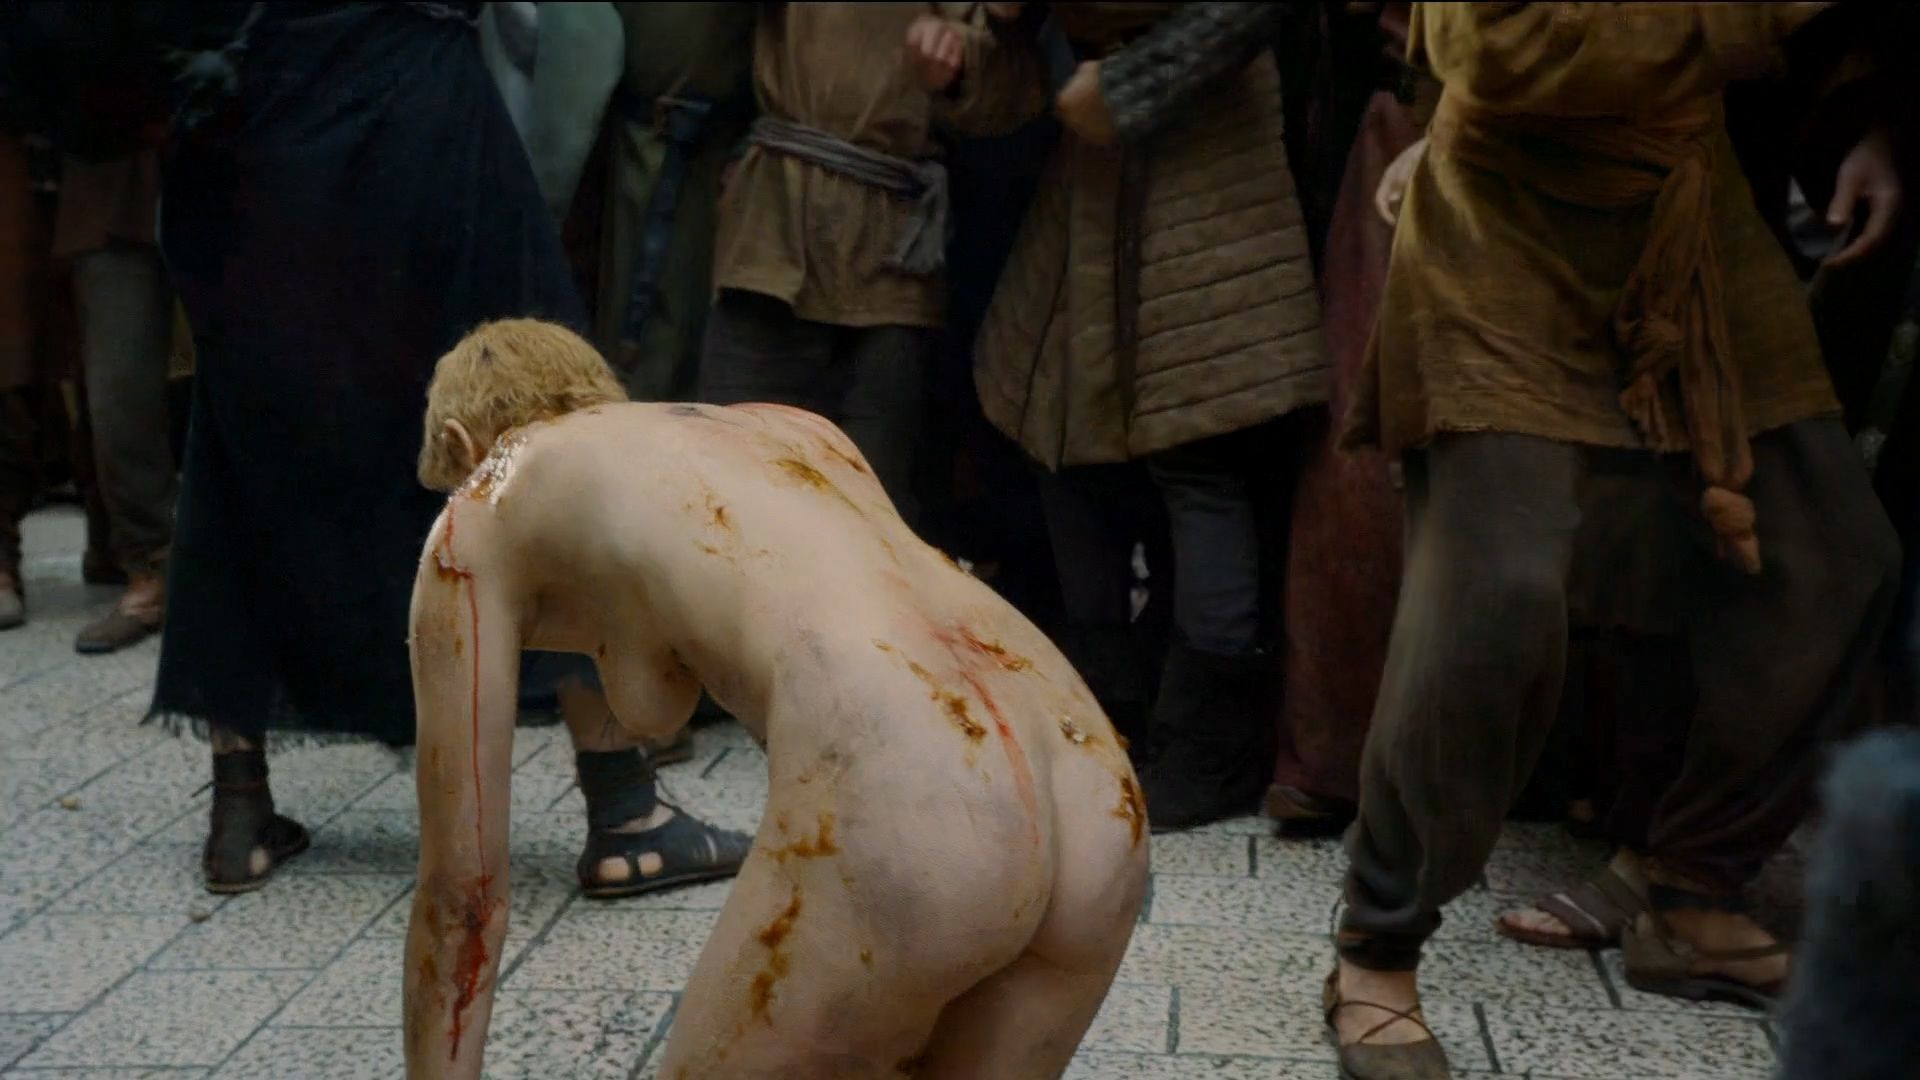 Lena Headey Nude Scenes Game of Thrones (Cersei Lannister) .